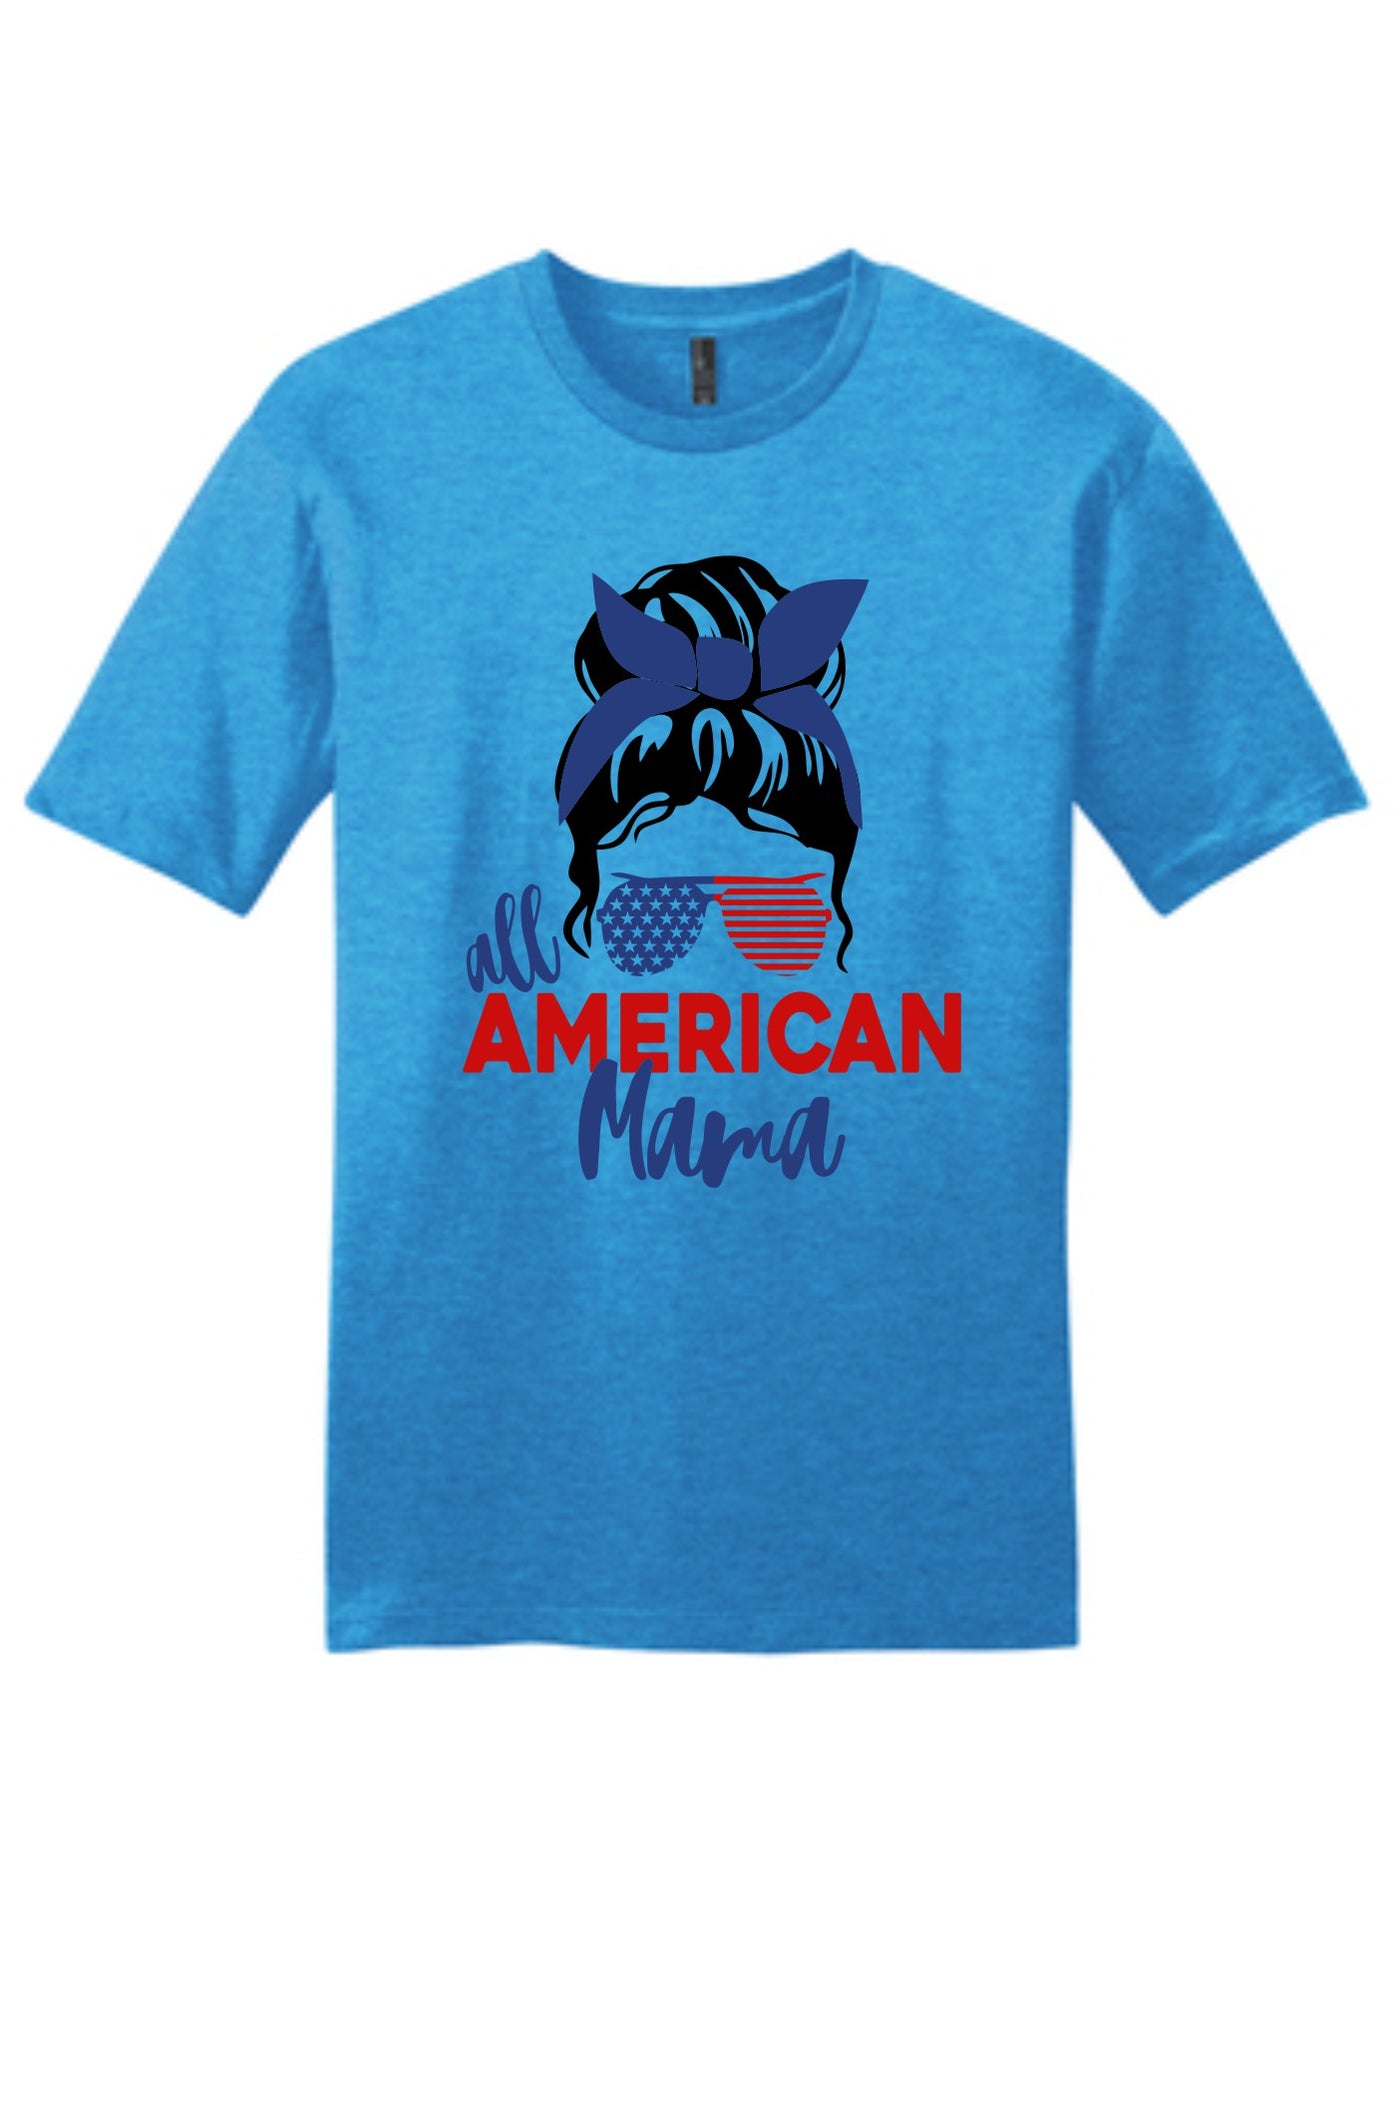 All American Mama Short Sleeve T-shirt